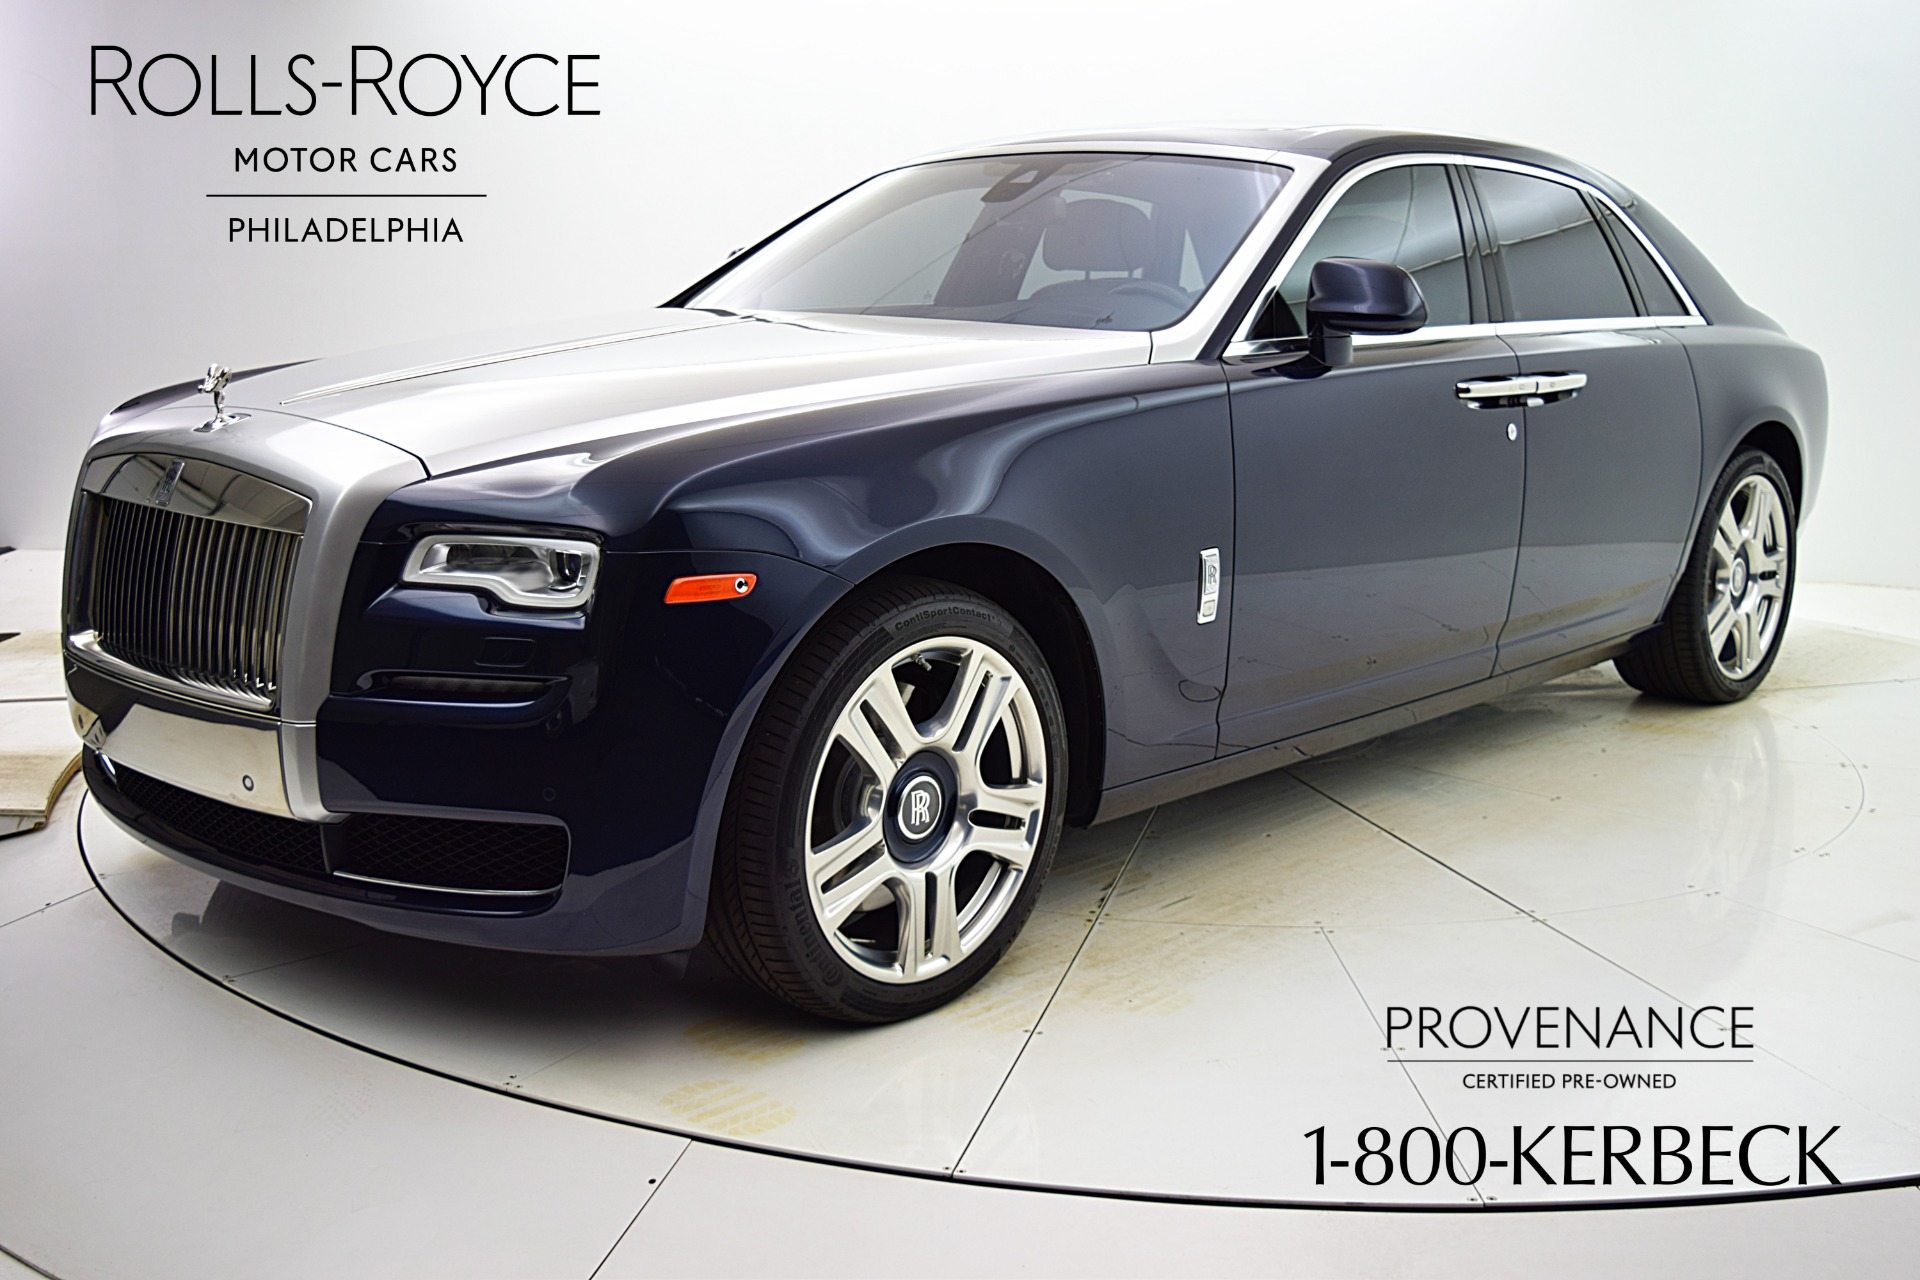 Used 2016 Rolls-Royce Ghost for sale Sold at Bentley Palmyra N.J. in Palmyra NJ 08065 2